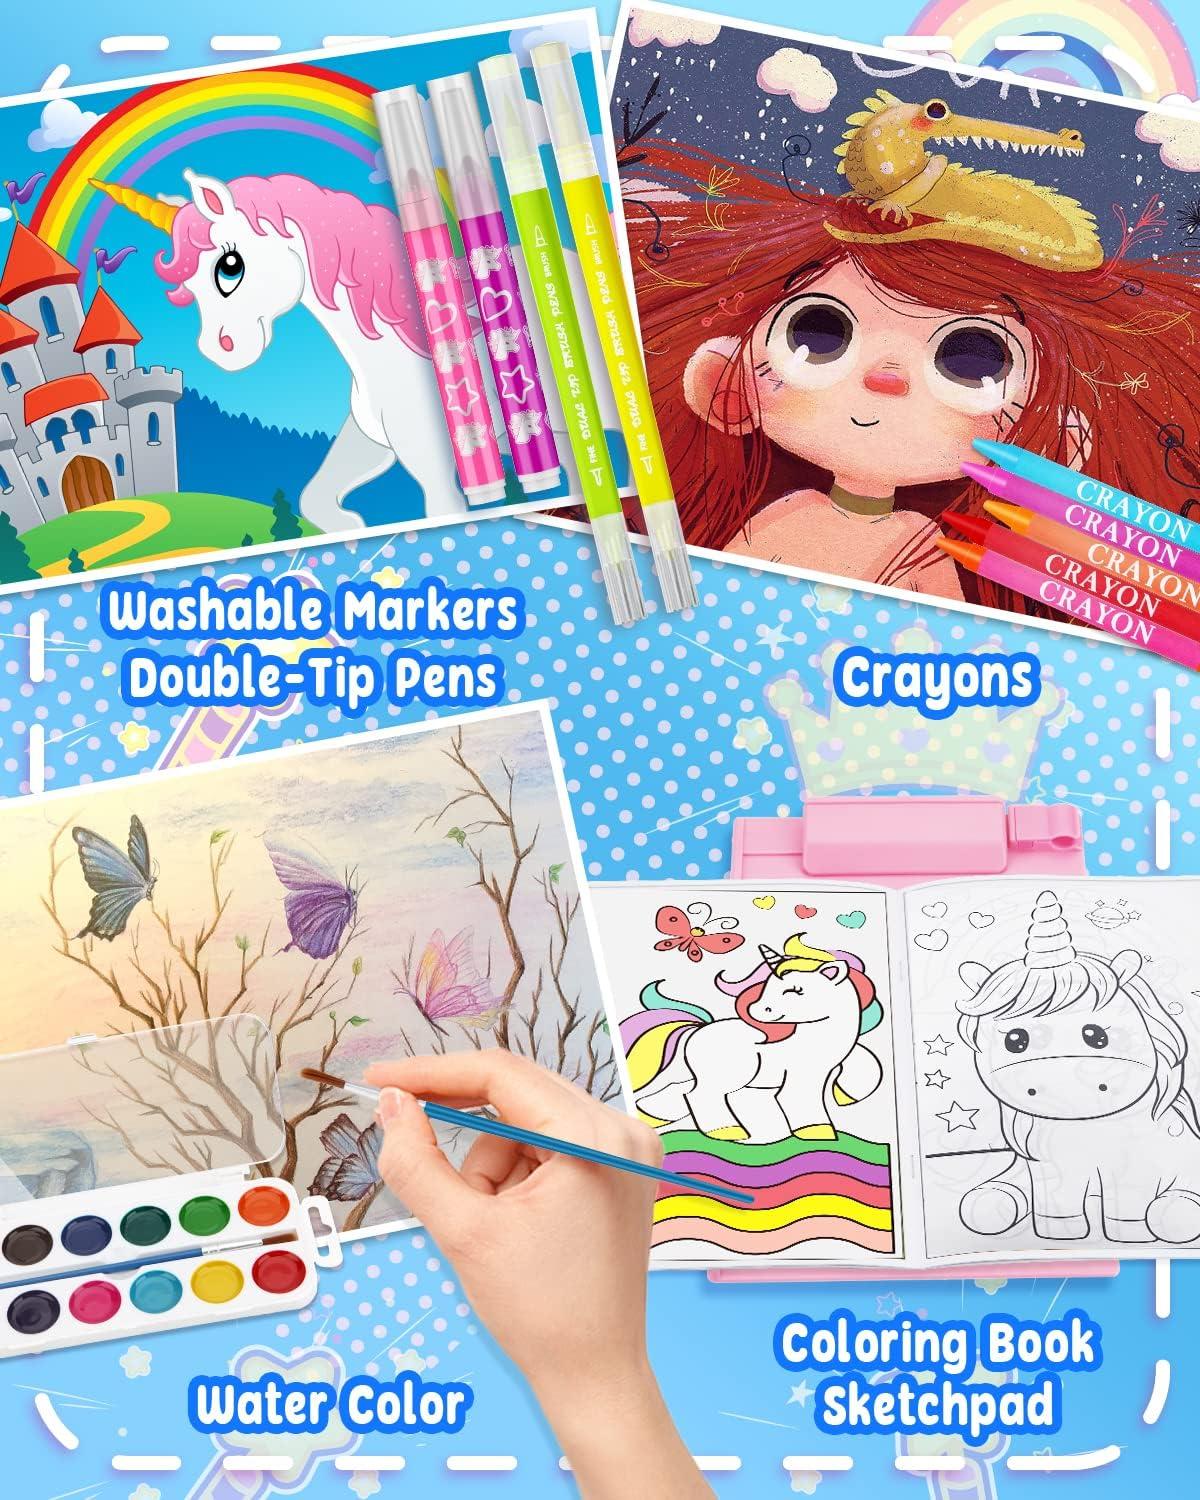 Art Kit Drawing Supplies Case, Kids Art Supplies Coloring Set for